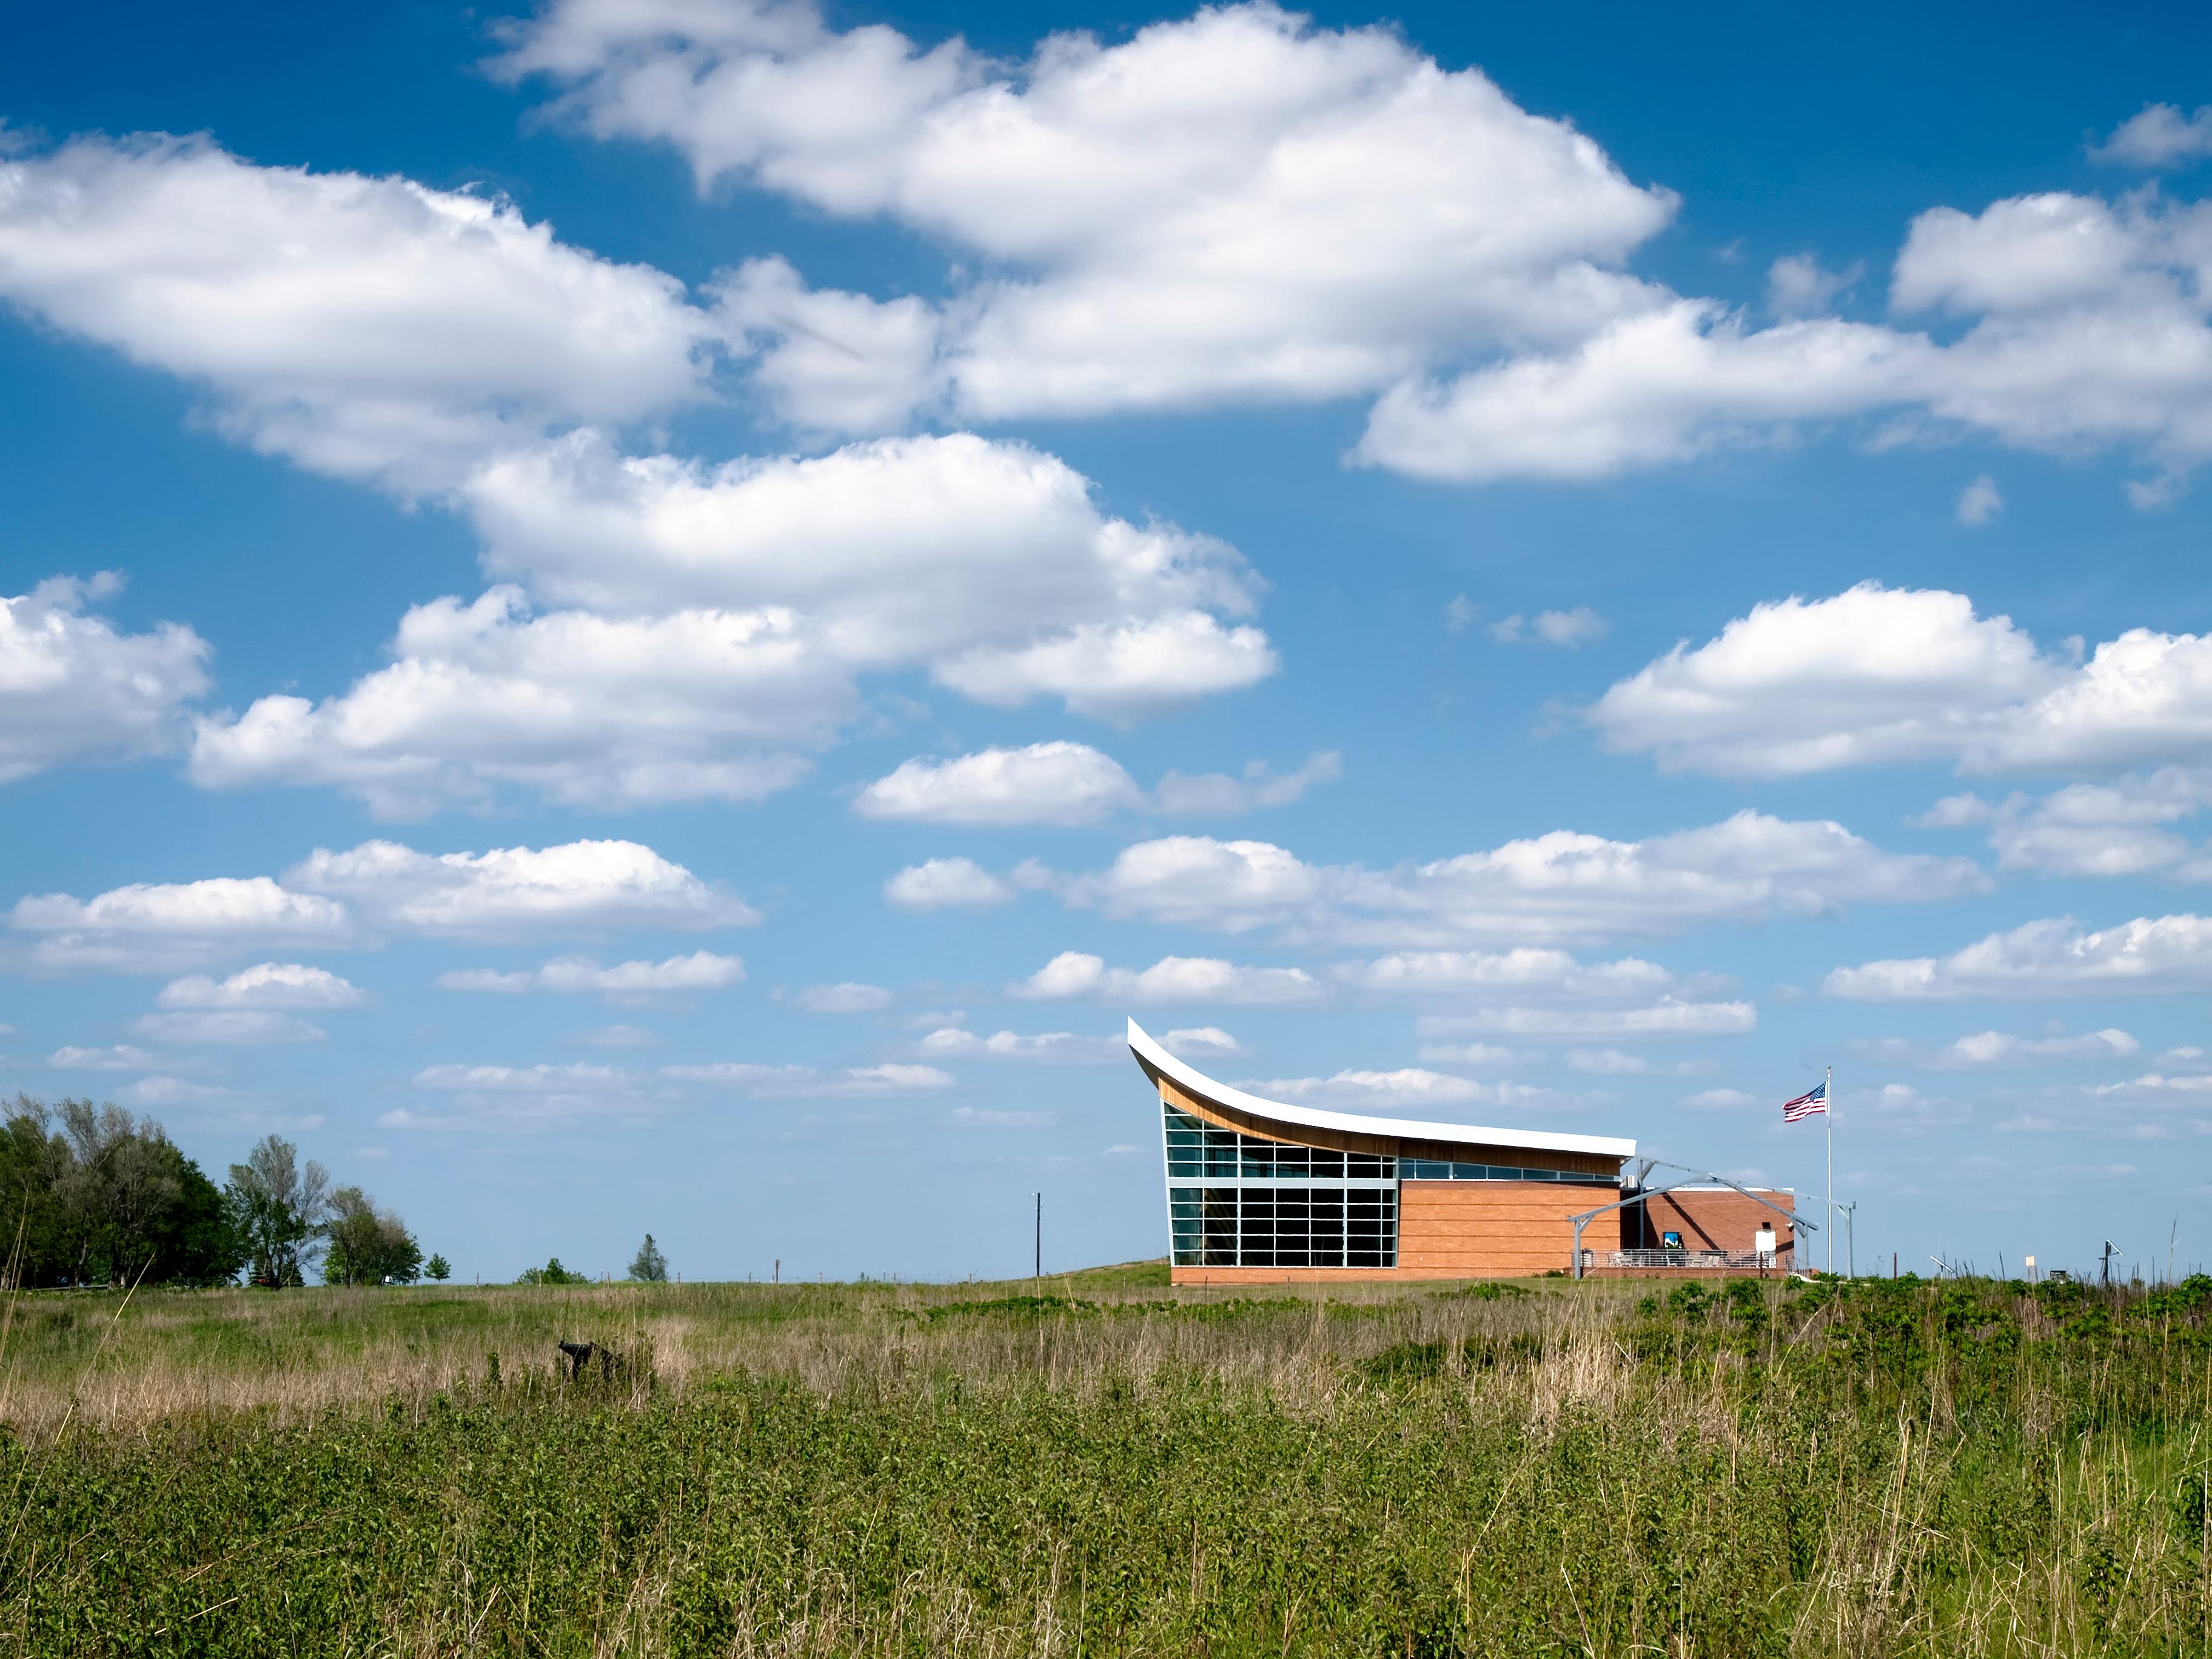 The Homestead Heritage Center on the tallgrass prairie